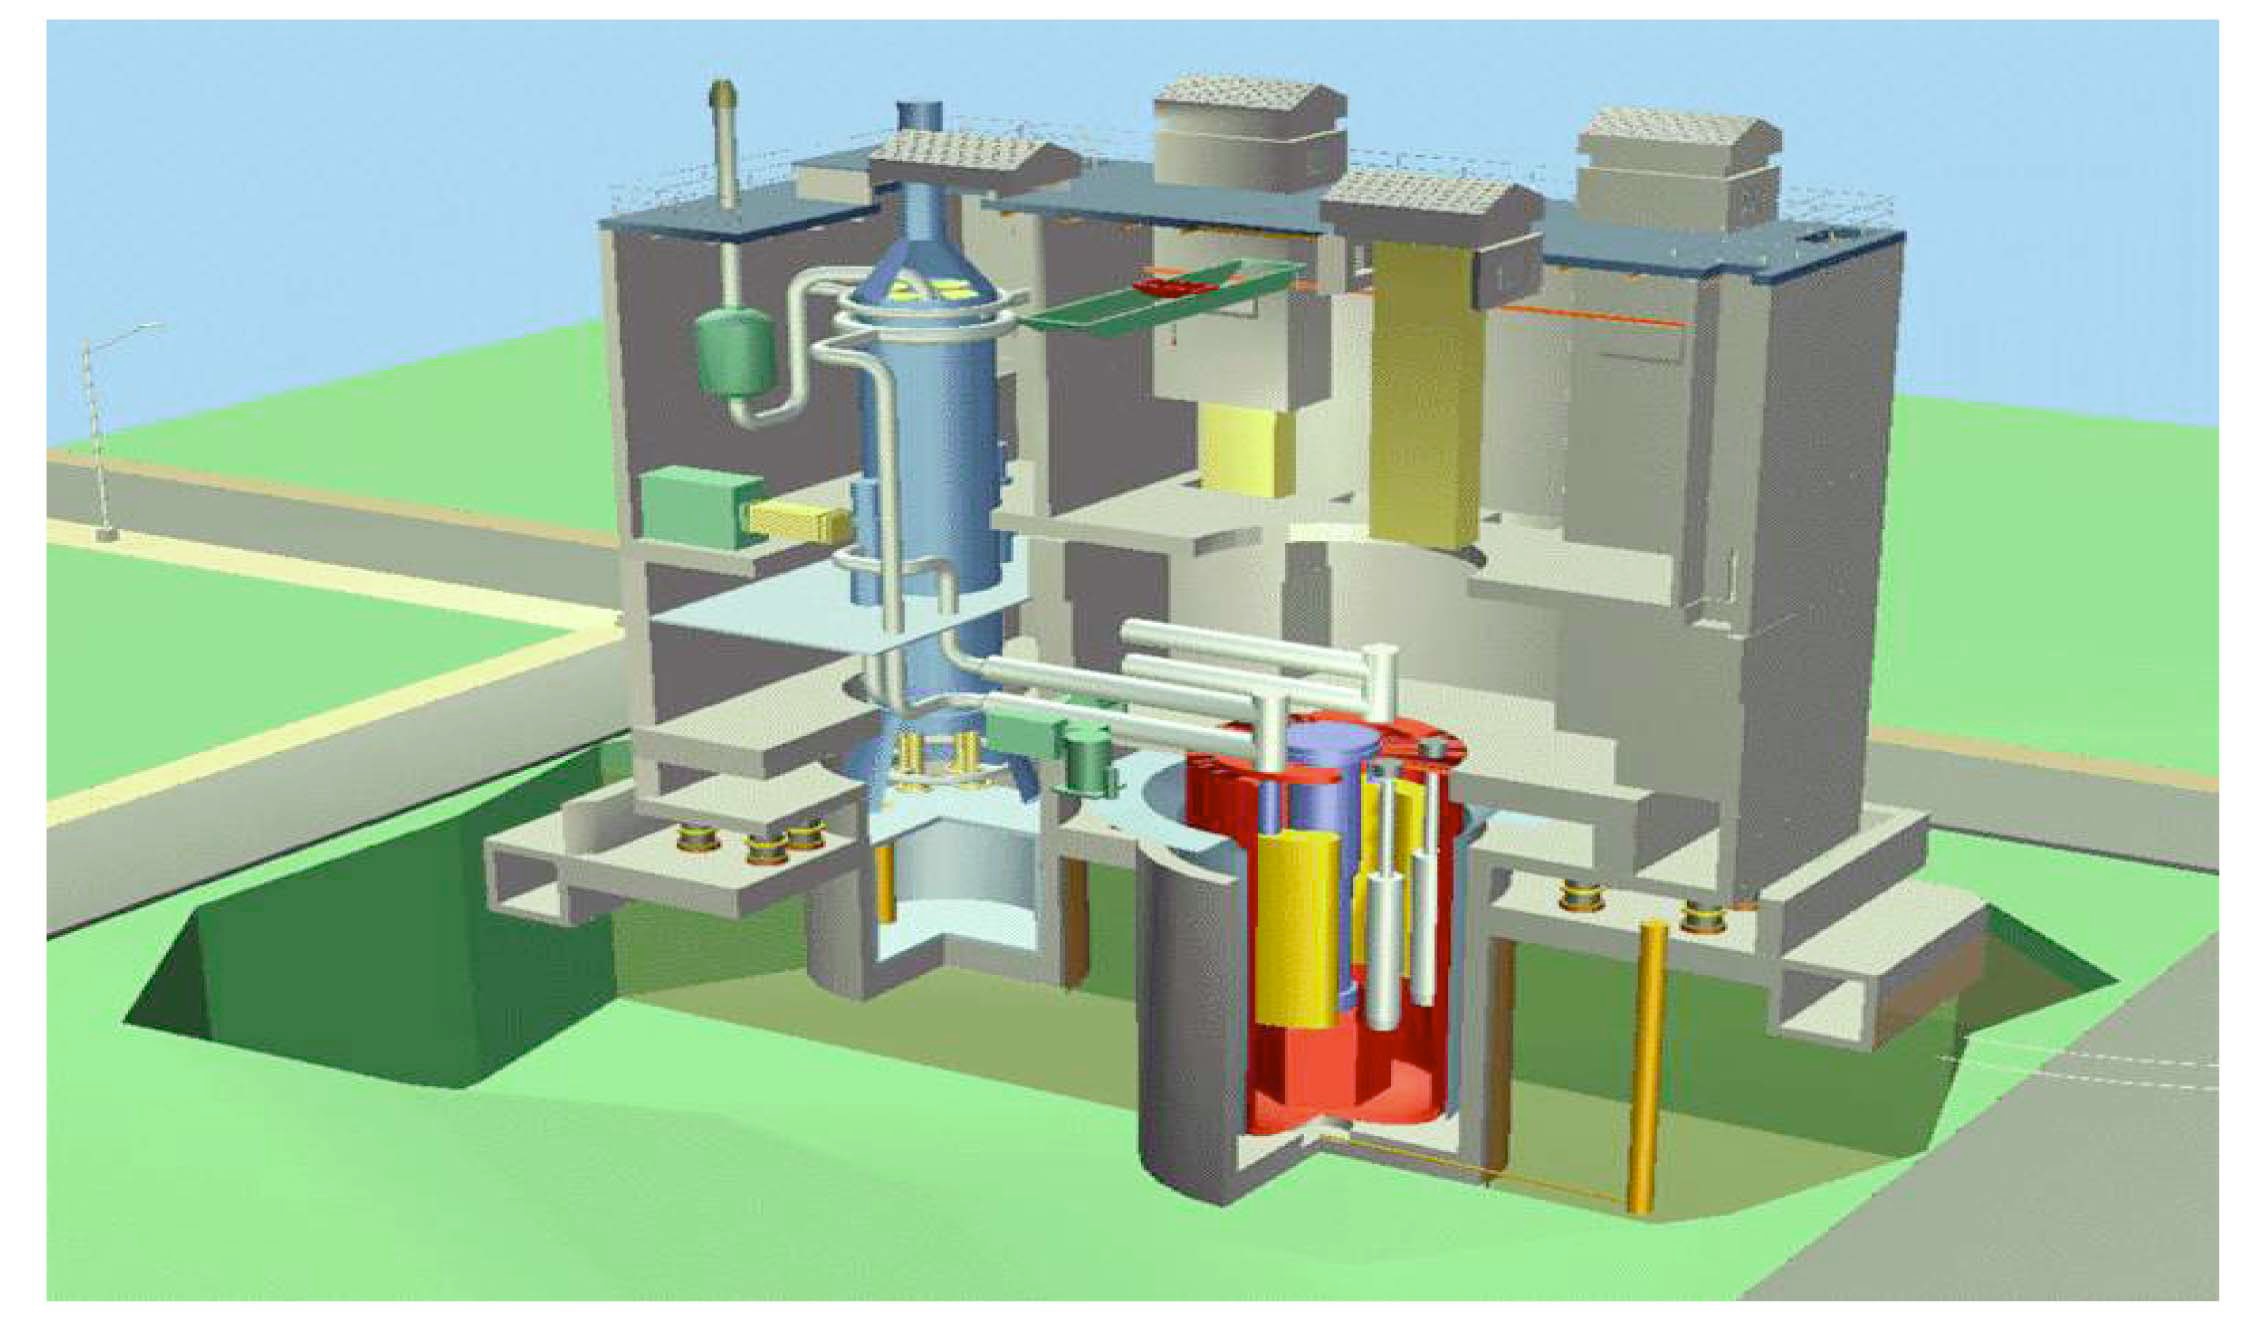 Design Concept of the GE Corporation’s Super Prism Reactor